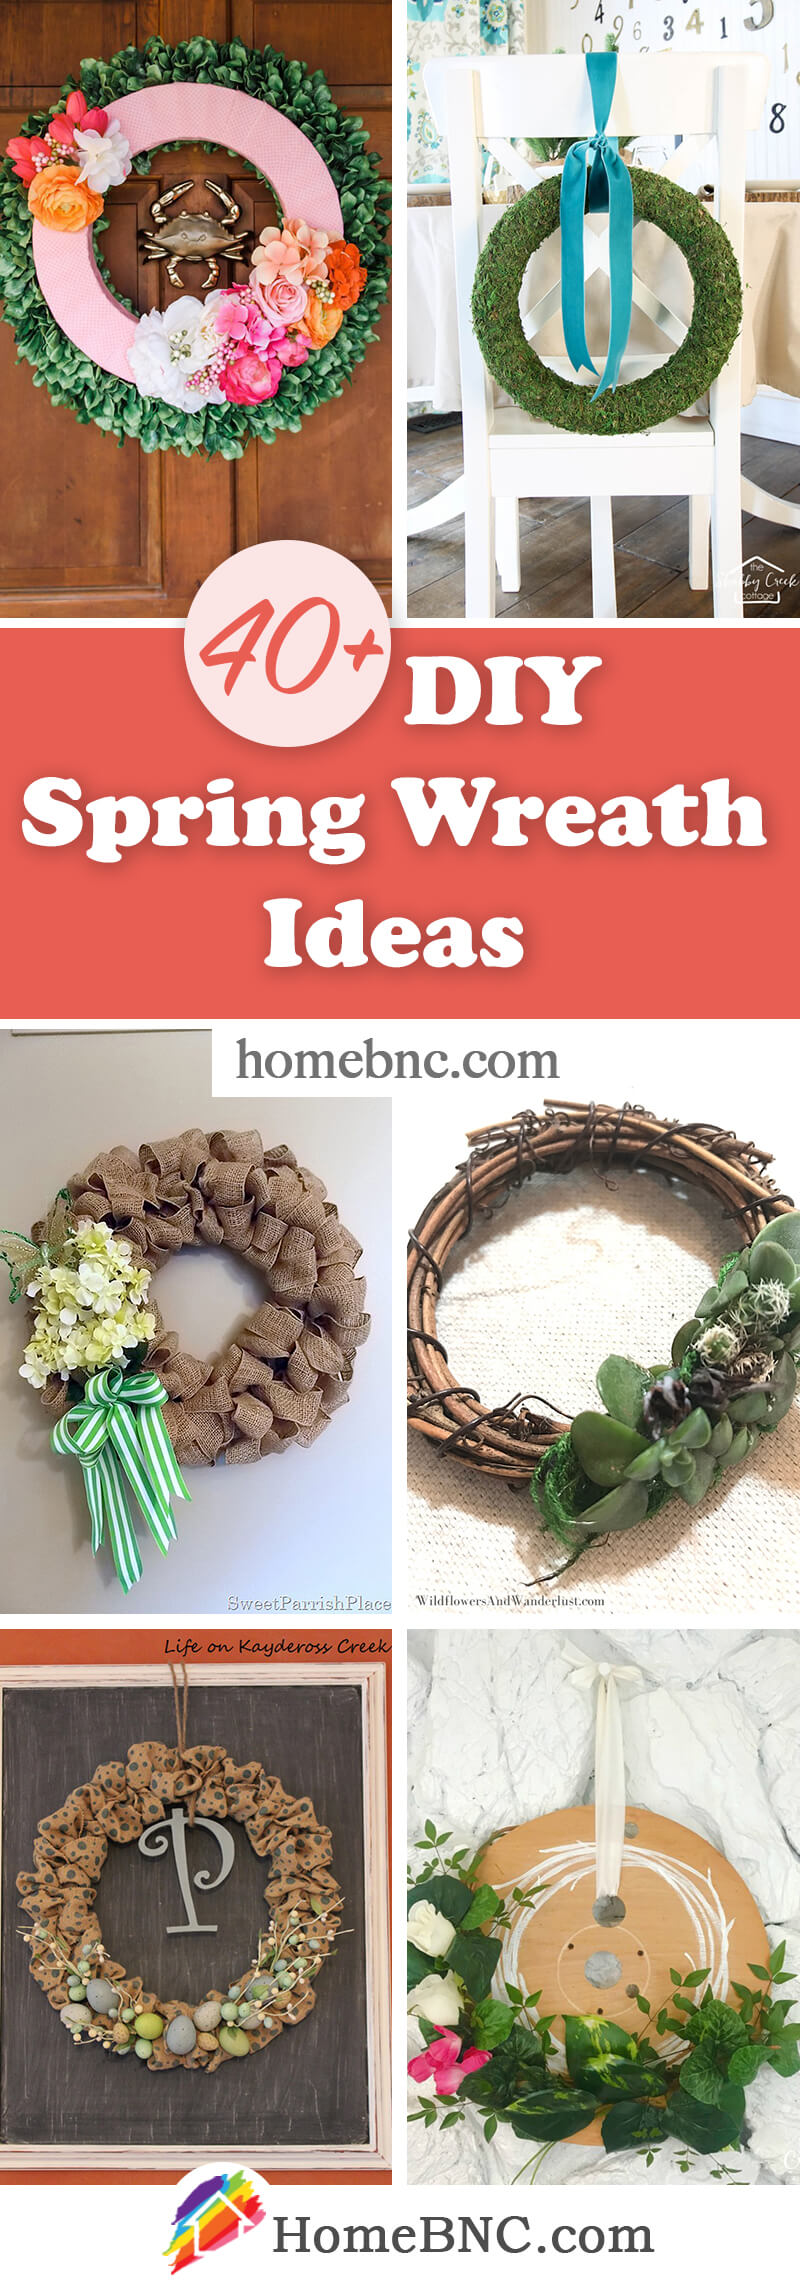 DIY Spring Wreaths